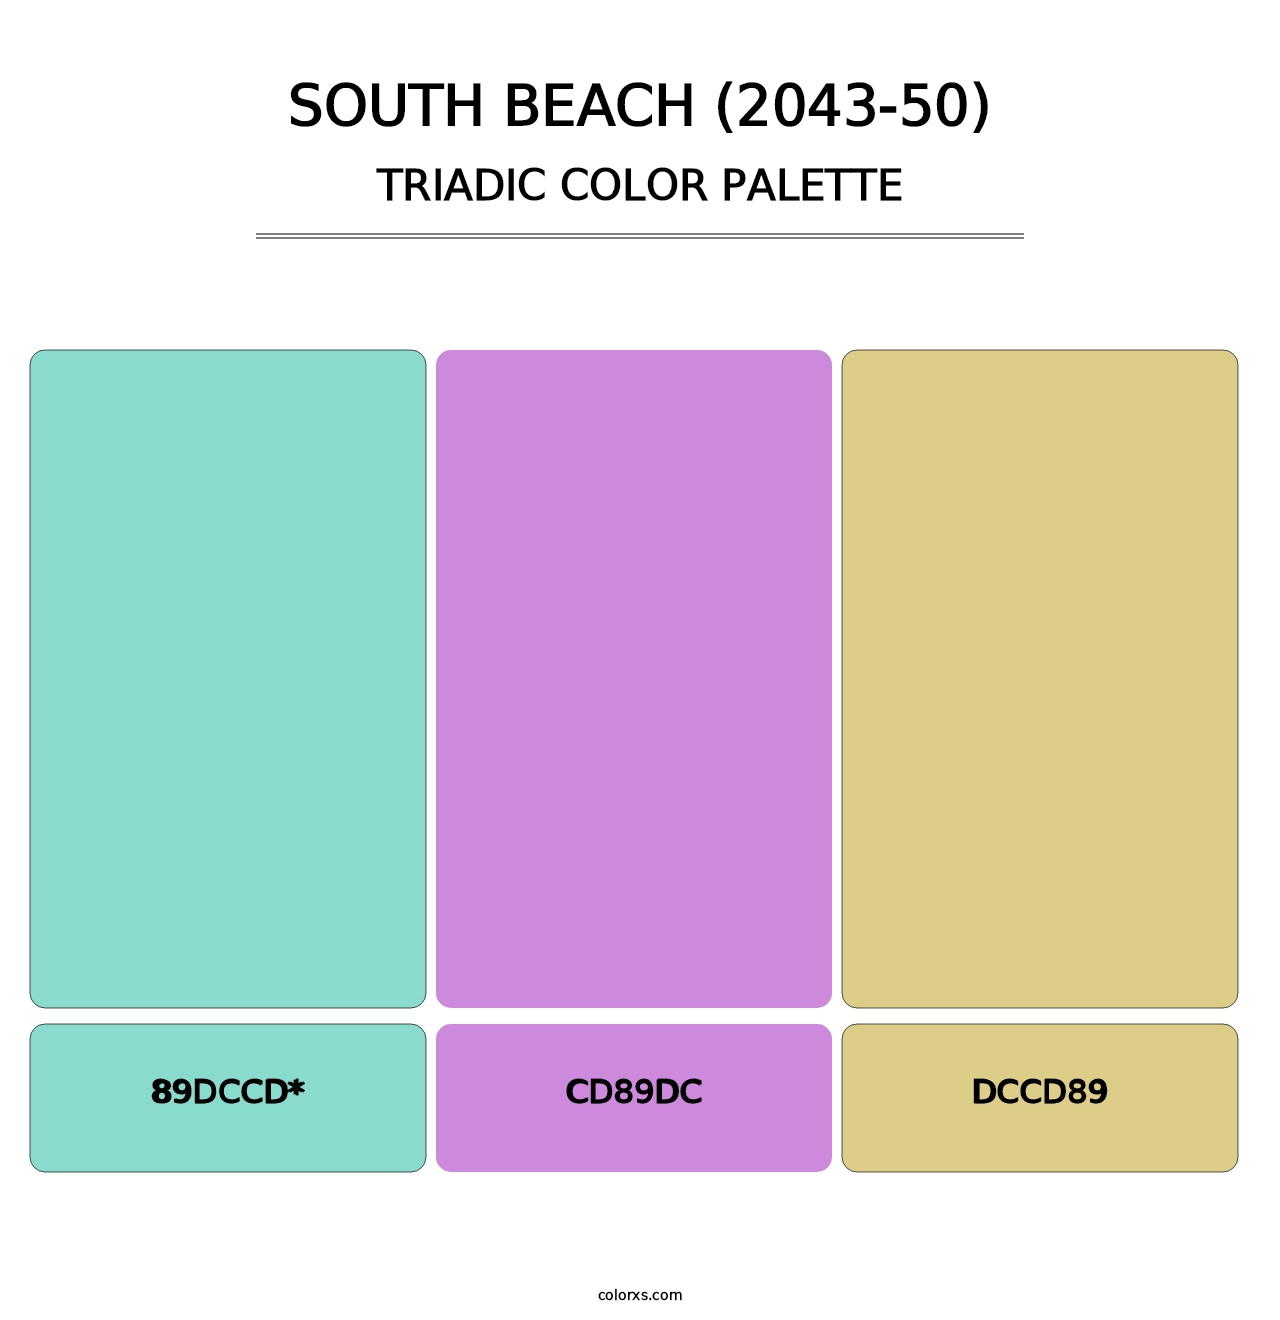 South Beach (2043-50) - Triadic Color Palette